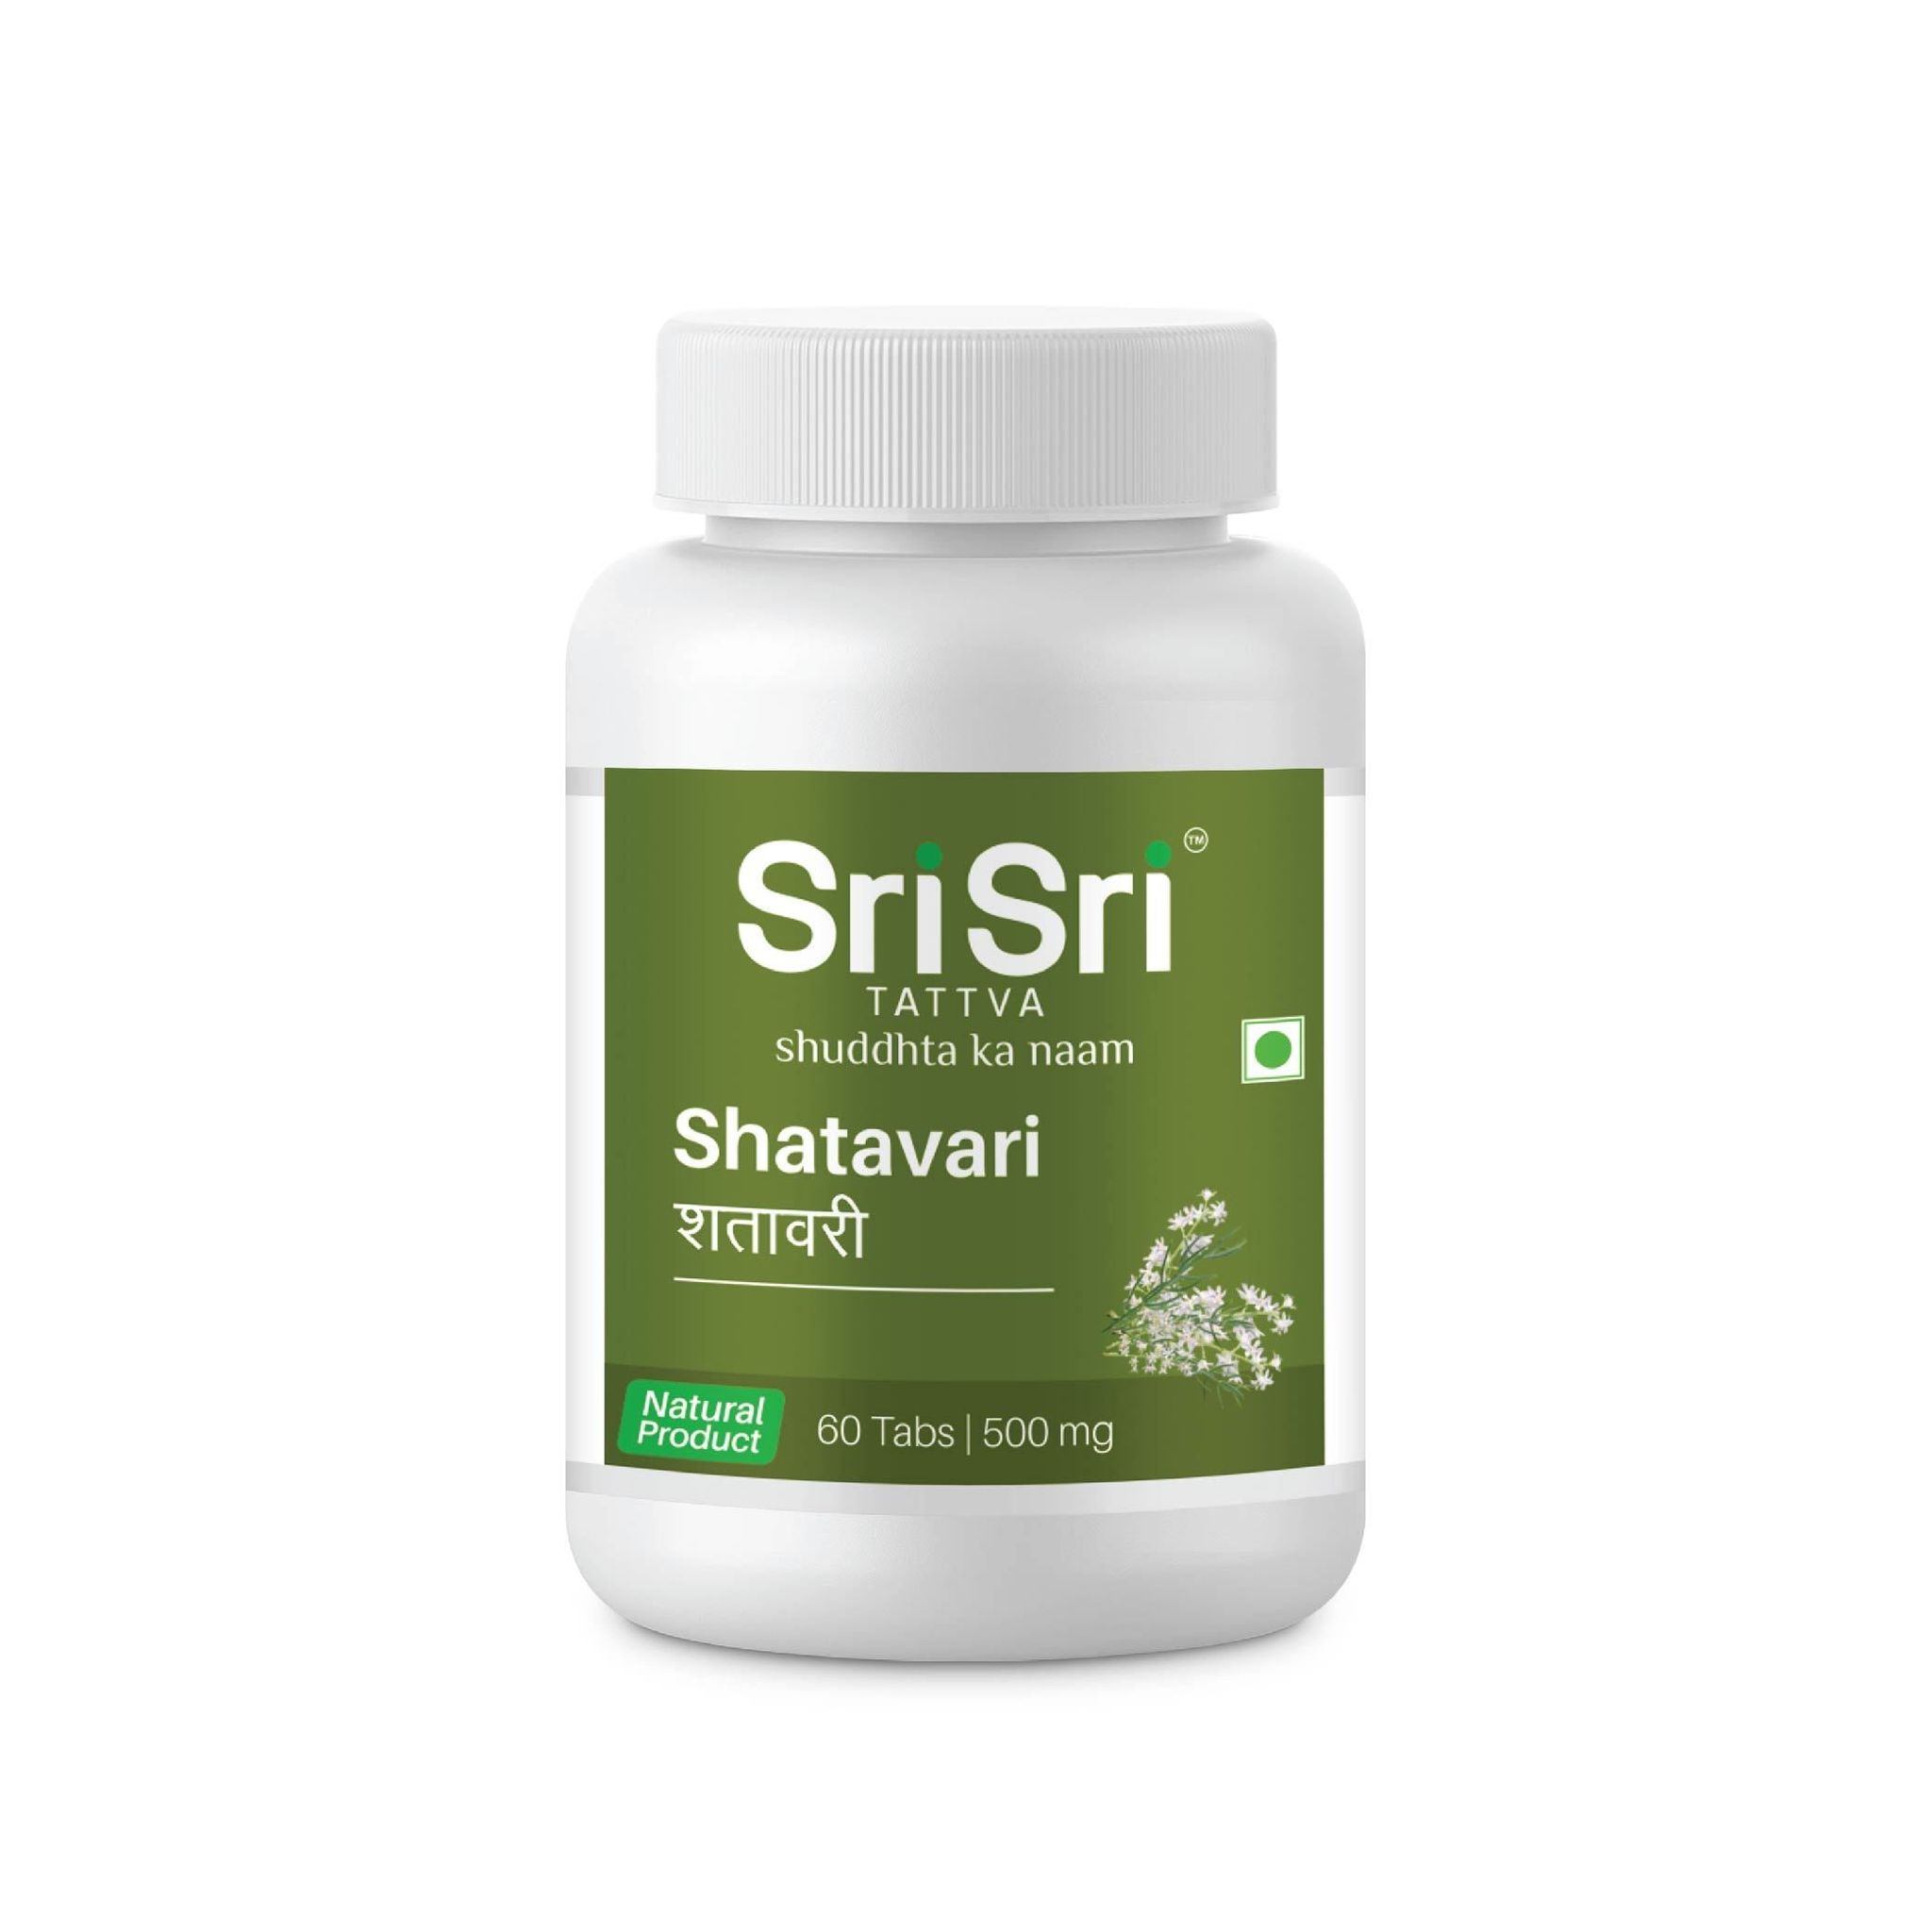 Sri Sri Tattva Shatavari - Complete Women's Care, 60Tabs | 500mg